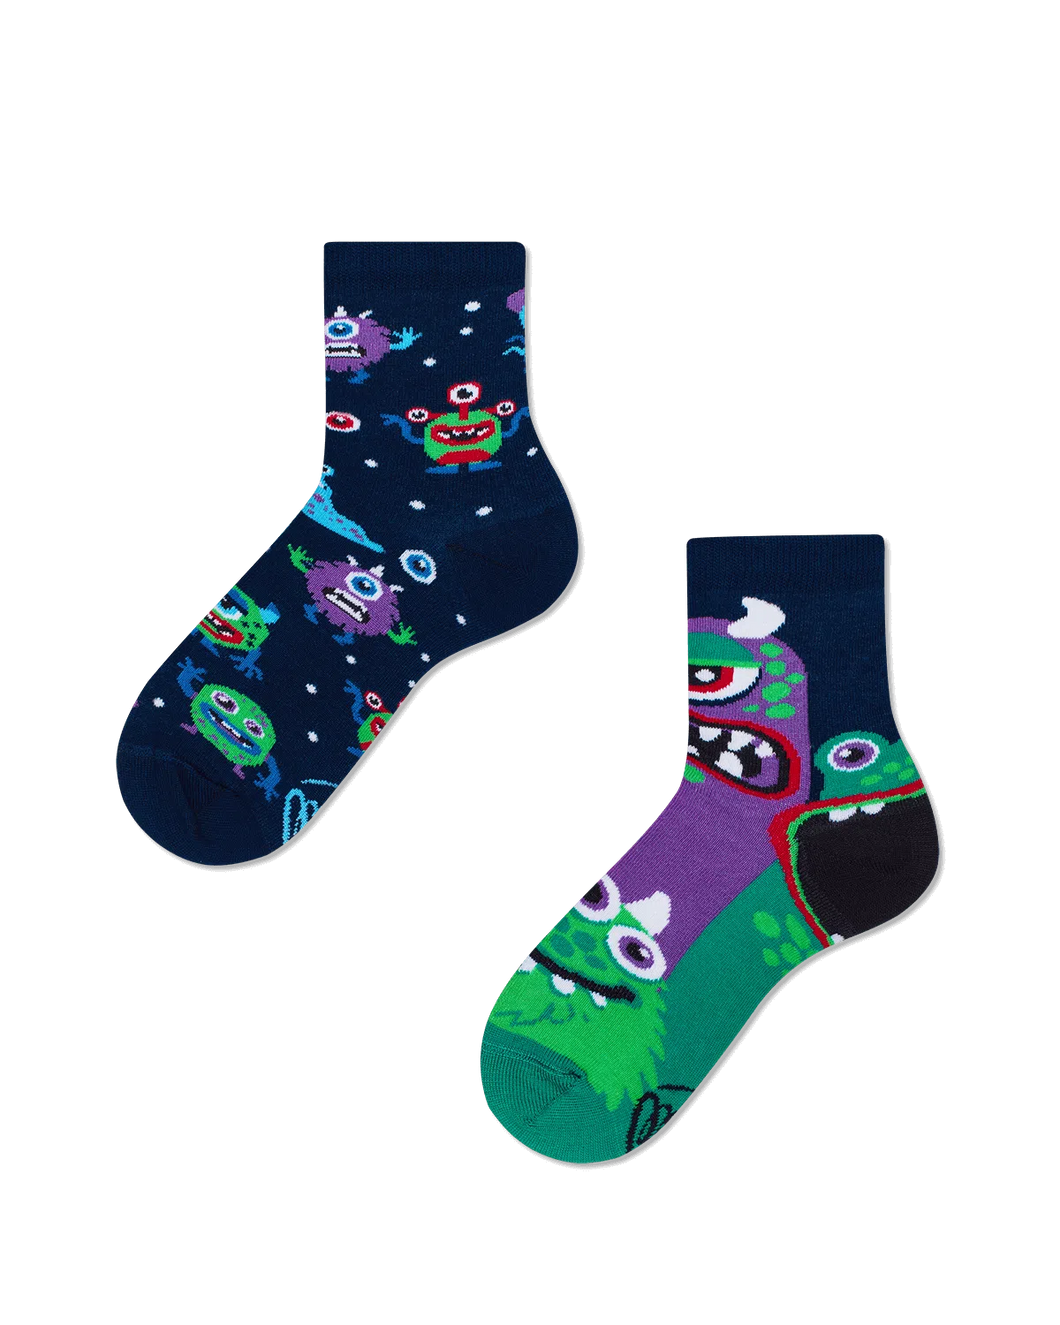 Kids socks - the monsters